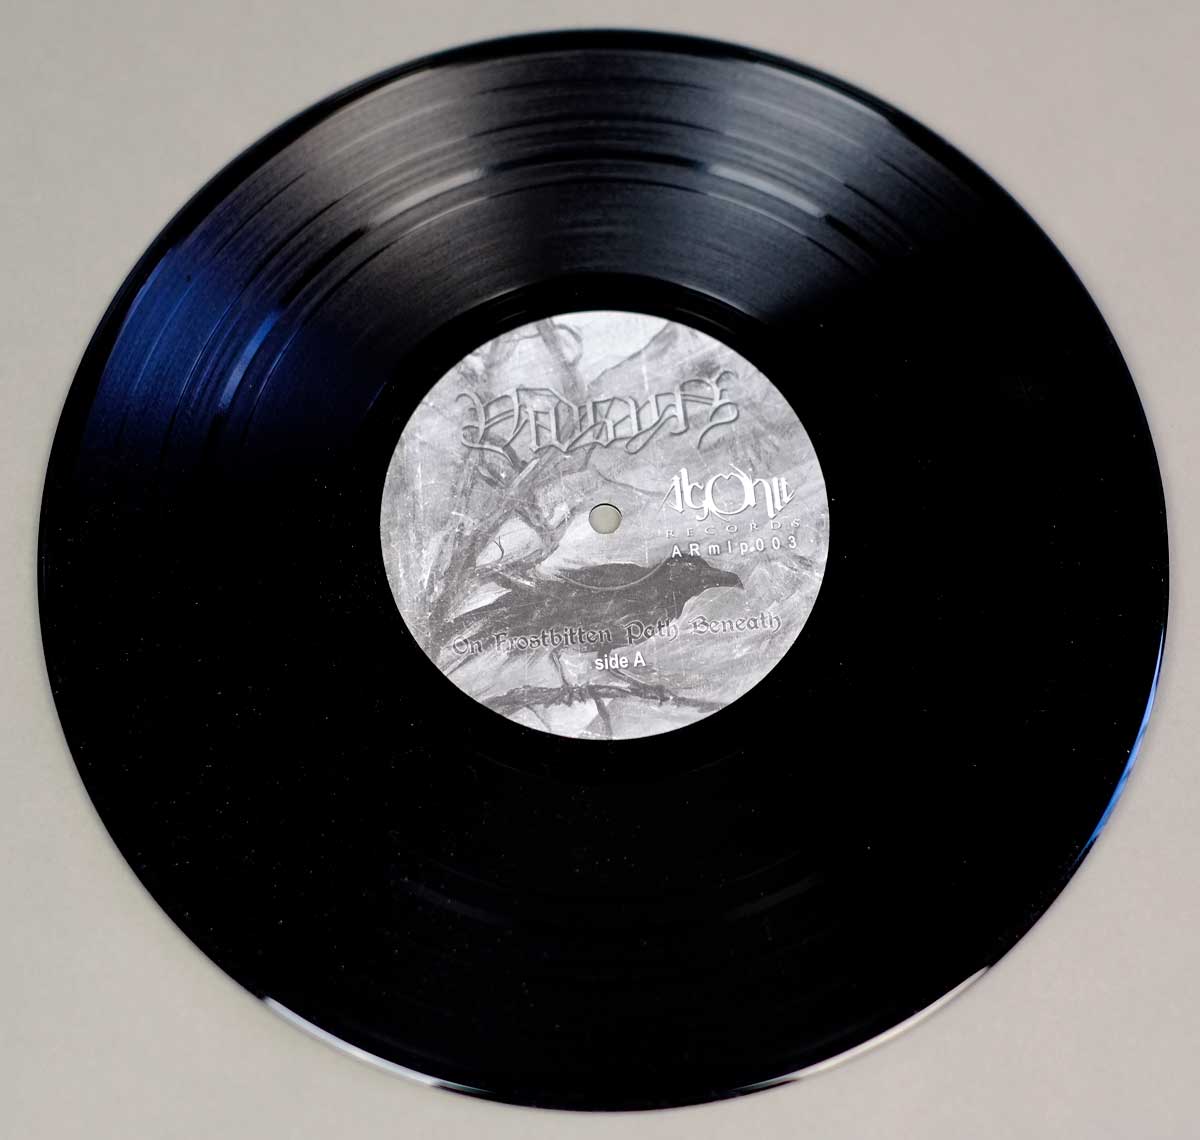 Photo of 12" LP Record Side One VIDSYN	- On Frostbitten Path Beneath   Vinyl Record Gallery https://vinyl-records.nl//